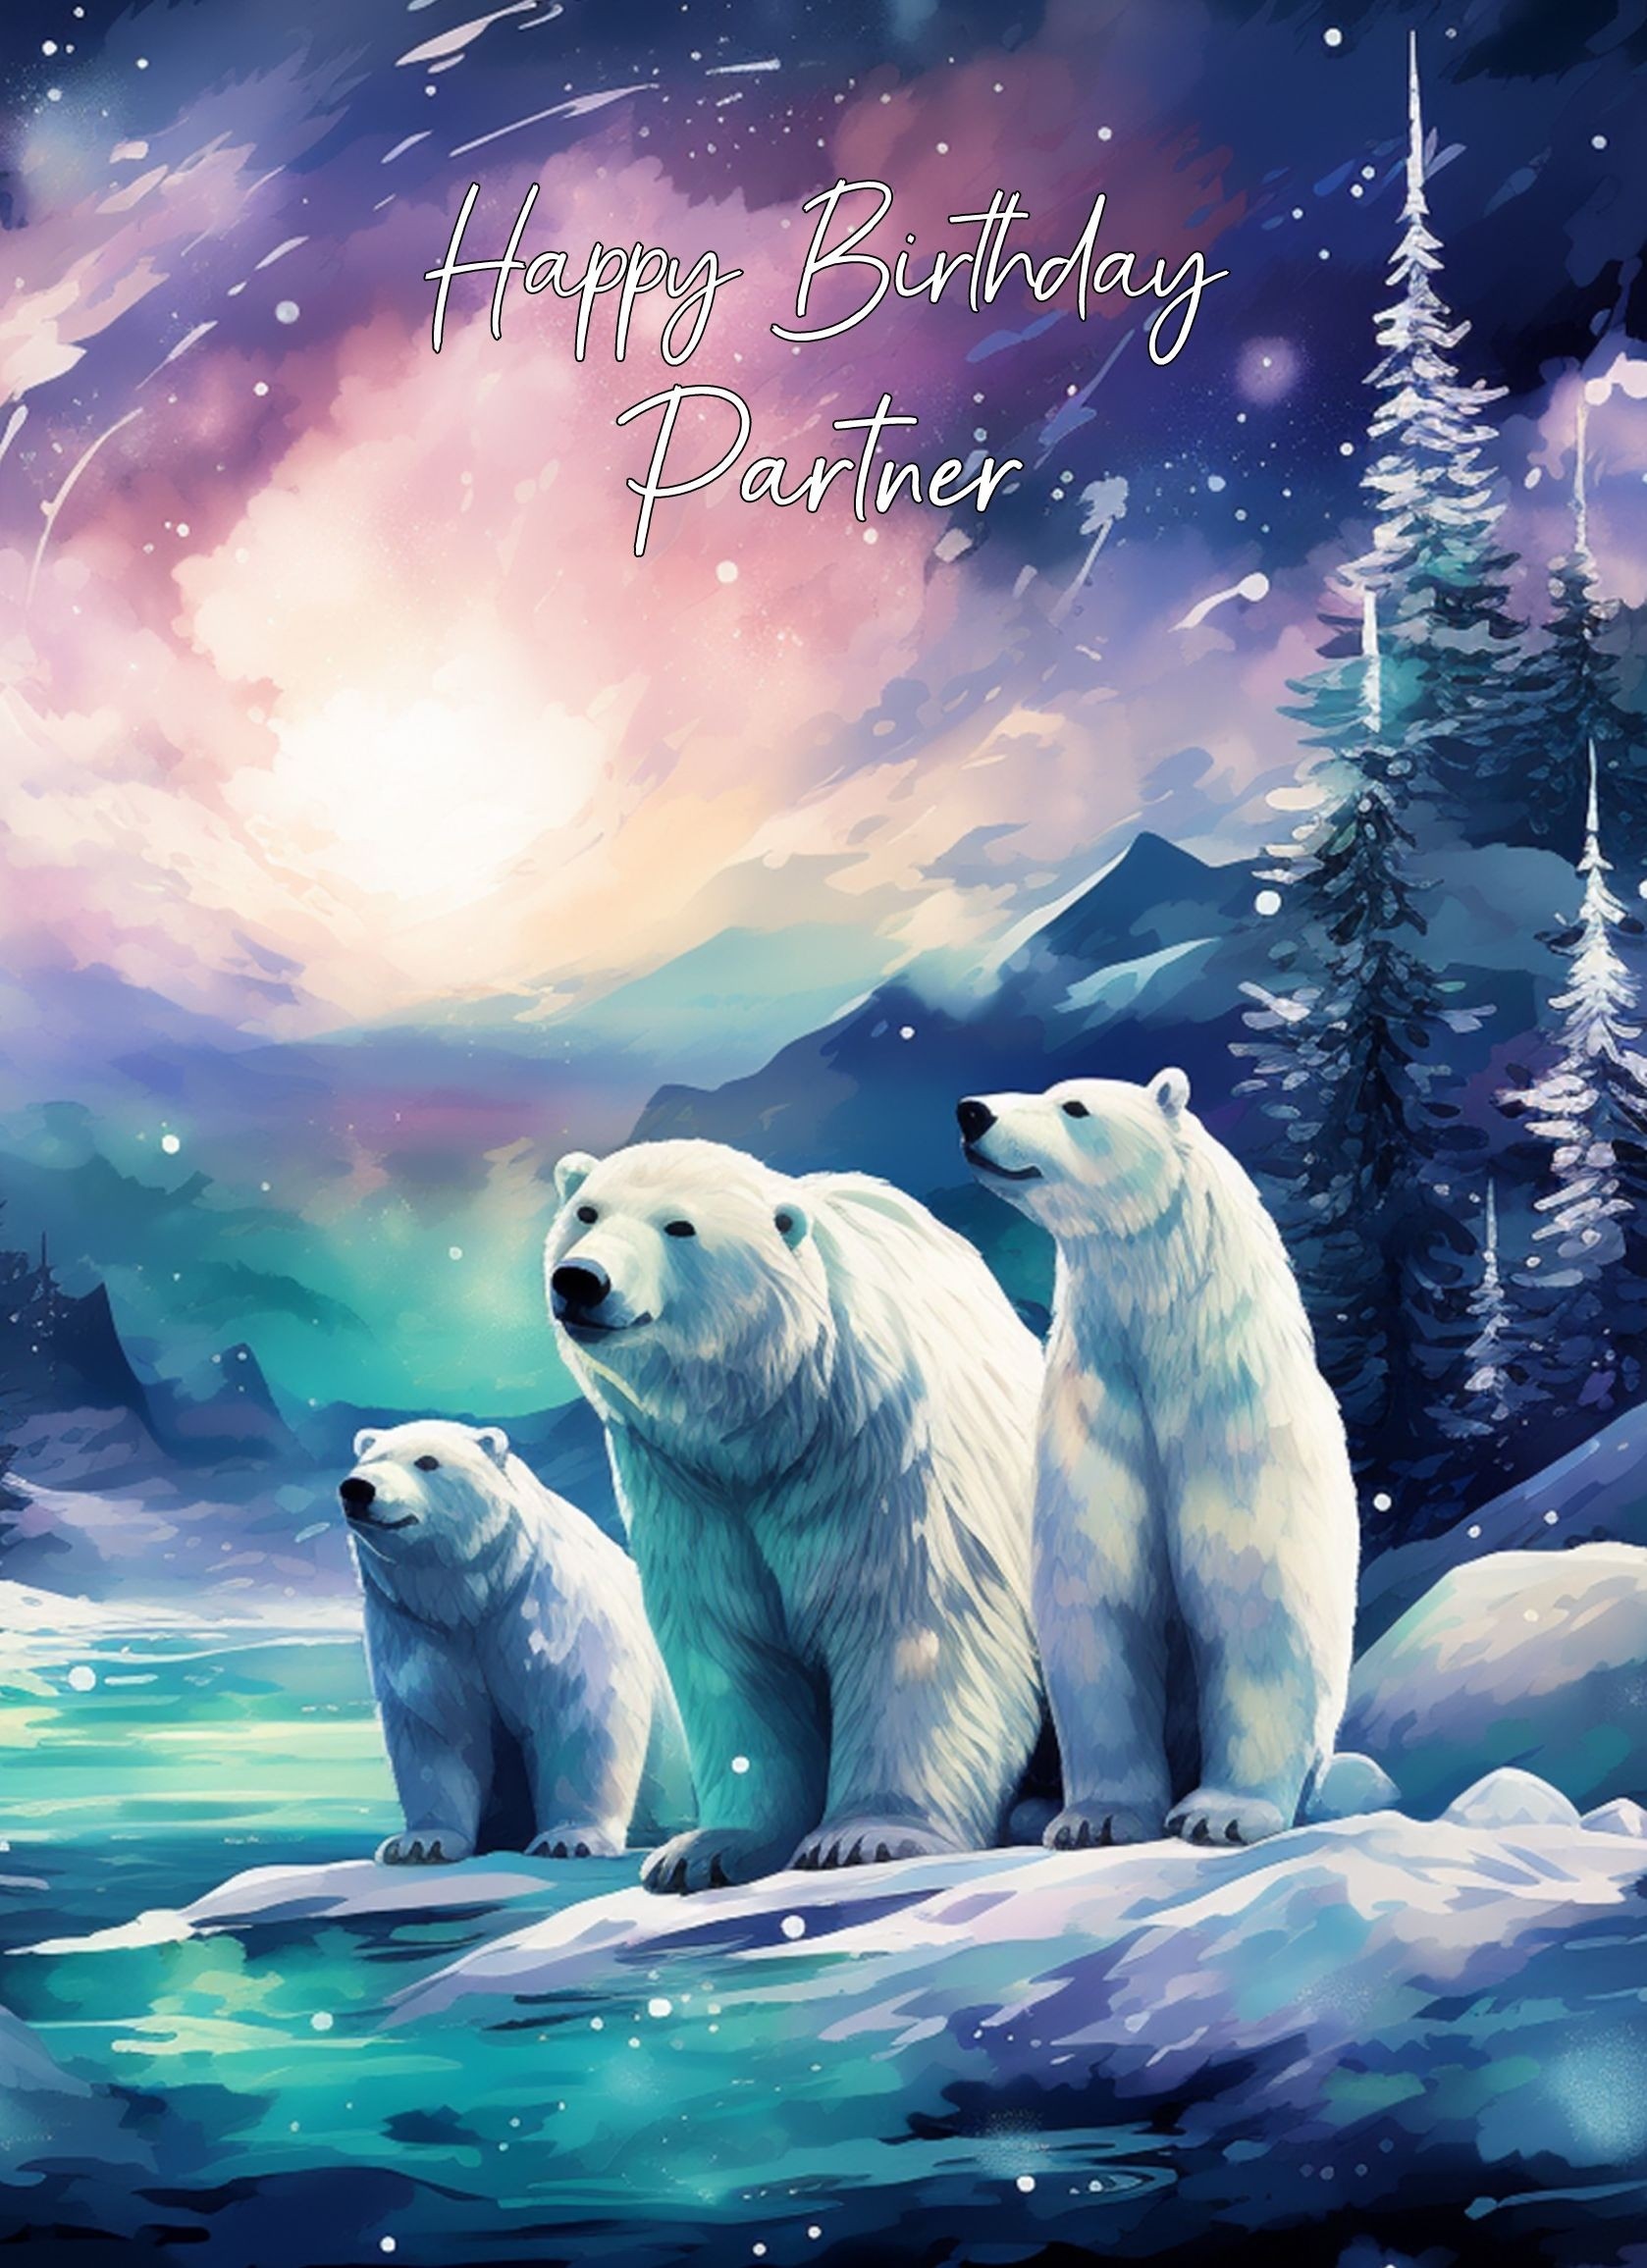 Polar Bear Art Birthday Card For Partner (Design 1)